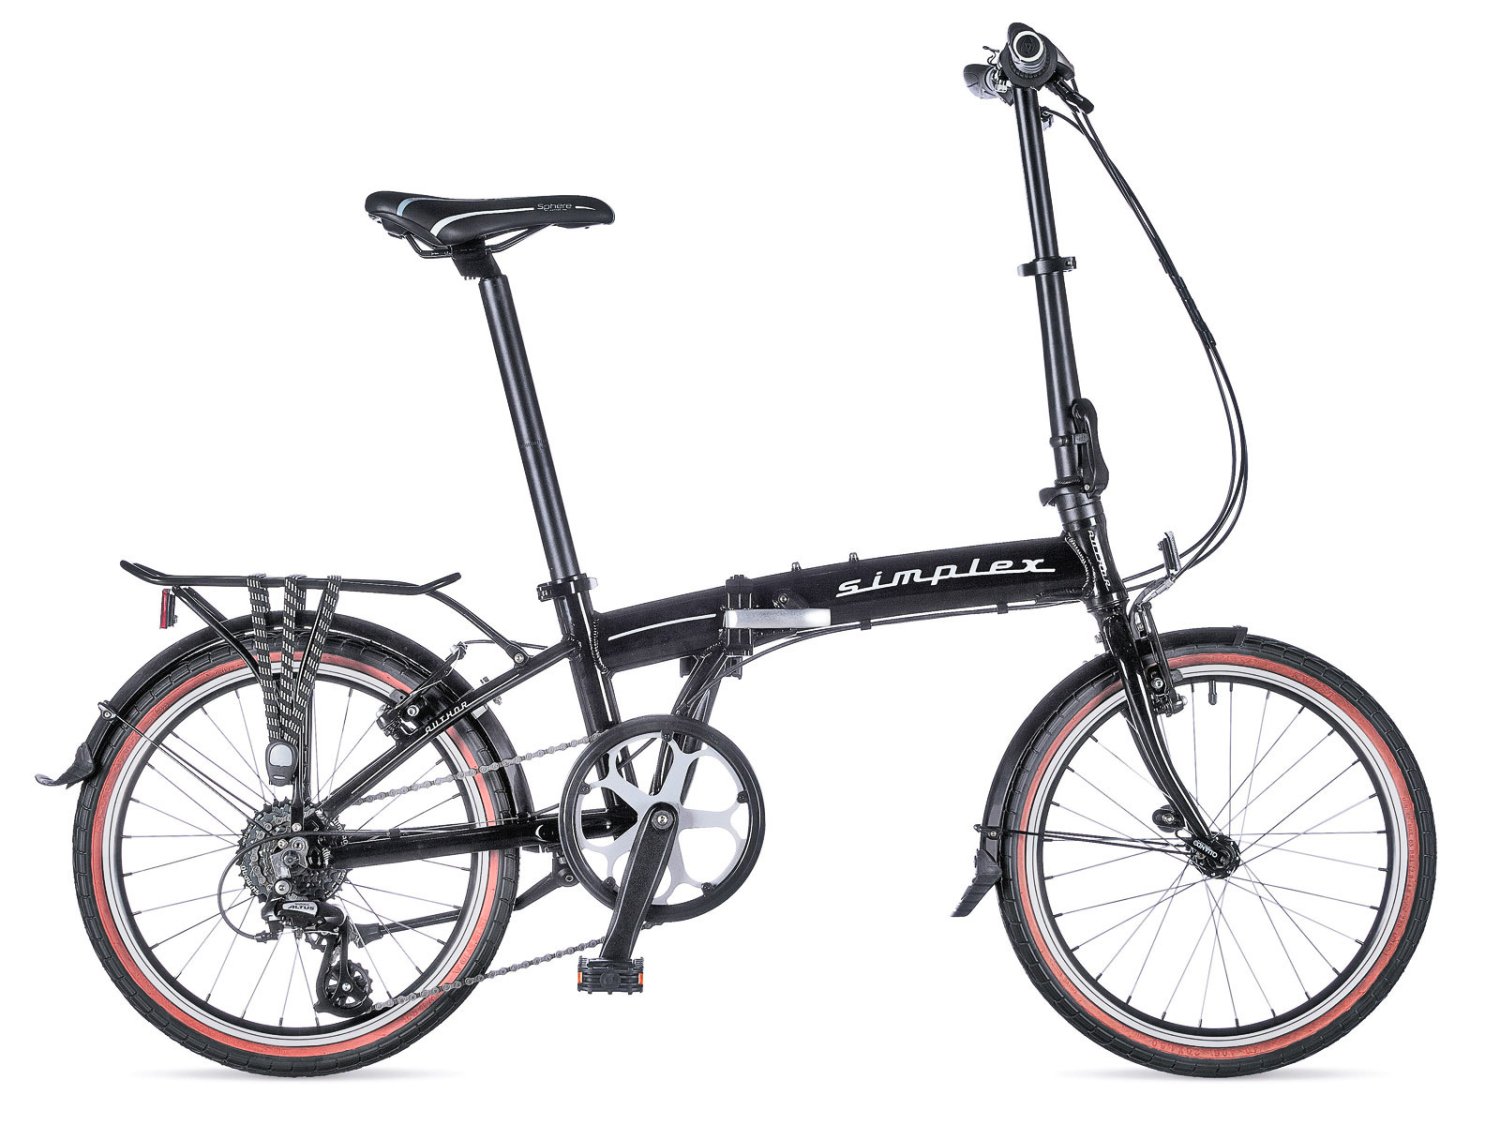 Рама велосипедная AUTHOR, алюминиевая, складная, с замком, для Simplex 2015, черная, 8-2015001 рама складная lastolite ll lr822 skylite